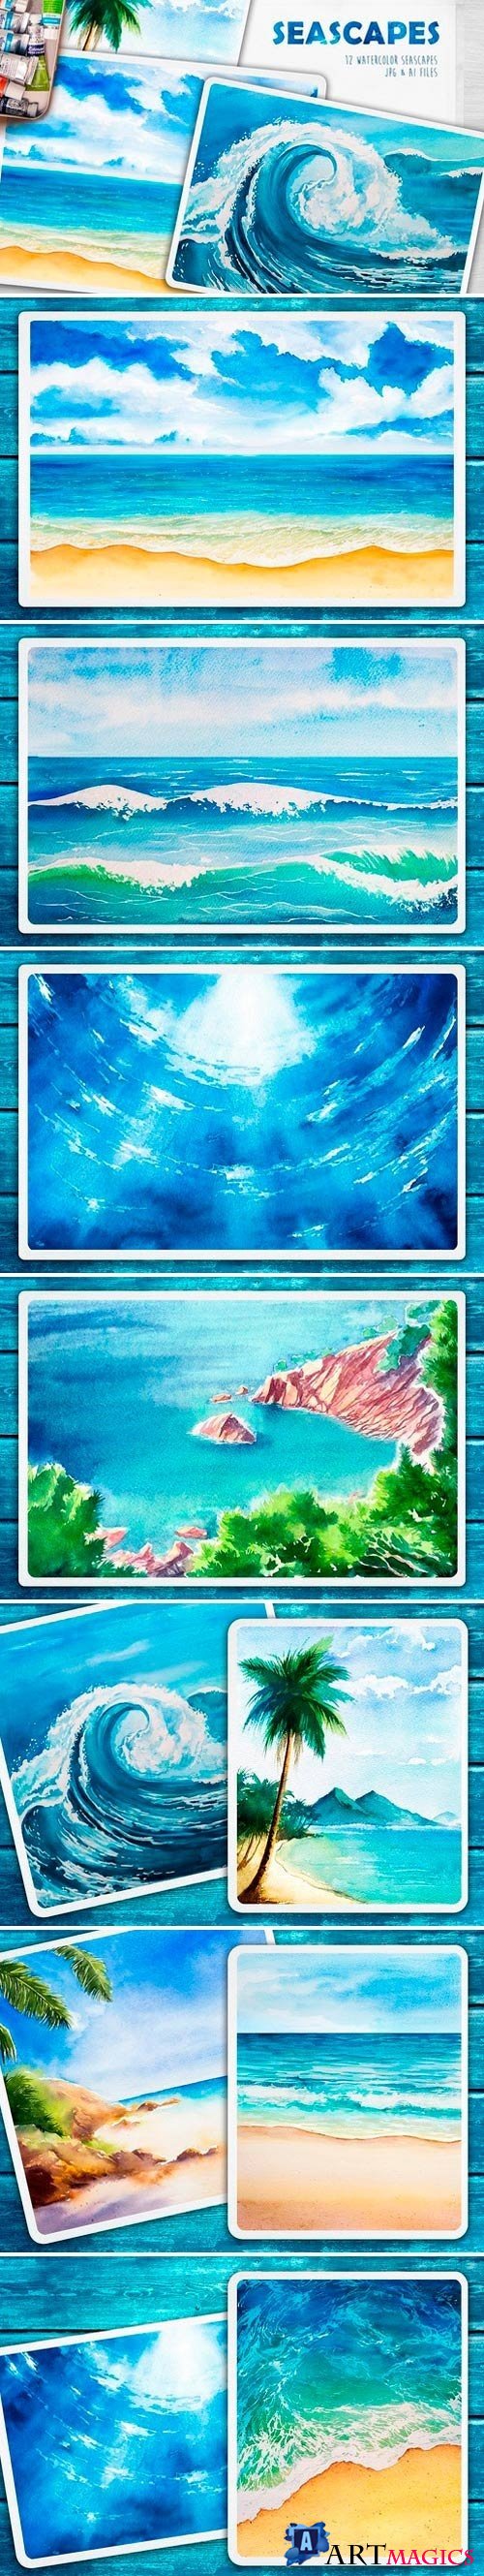 Seascapes. Watercolor illustrations - 1432806